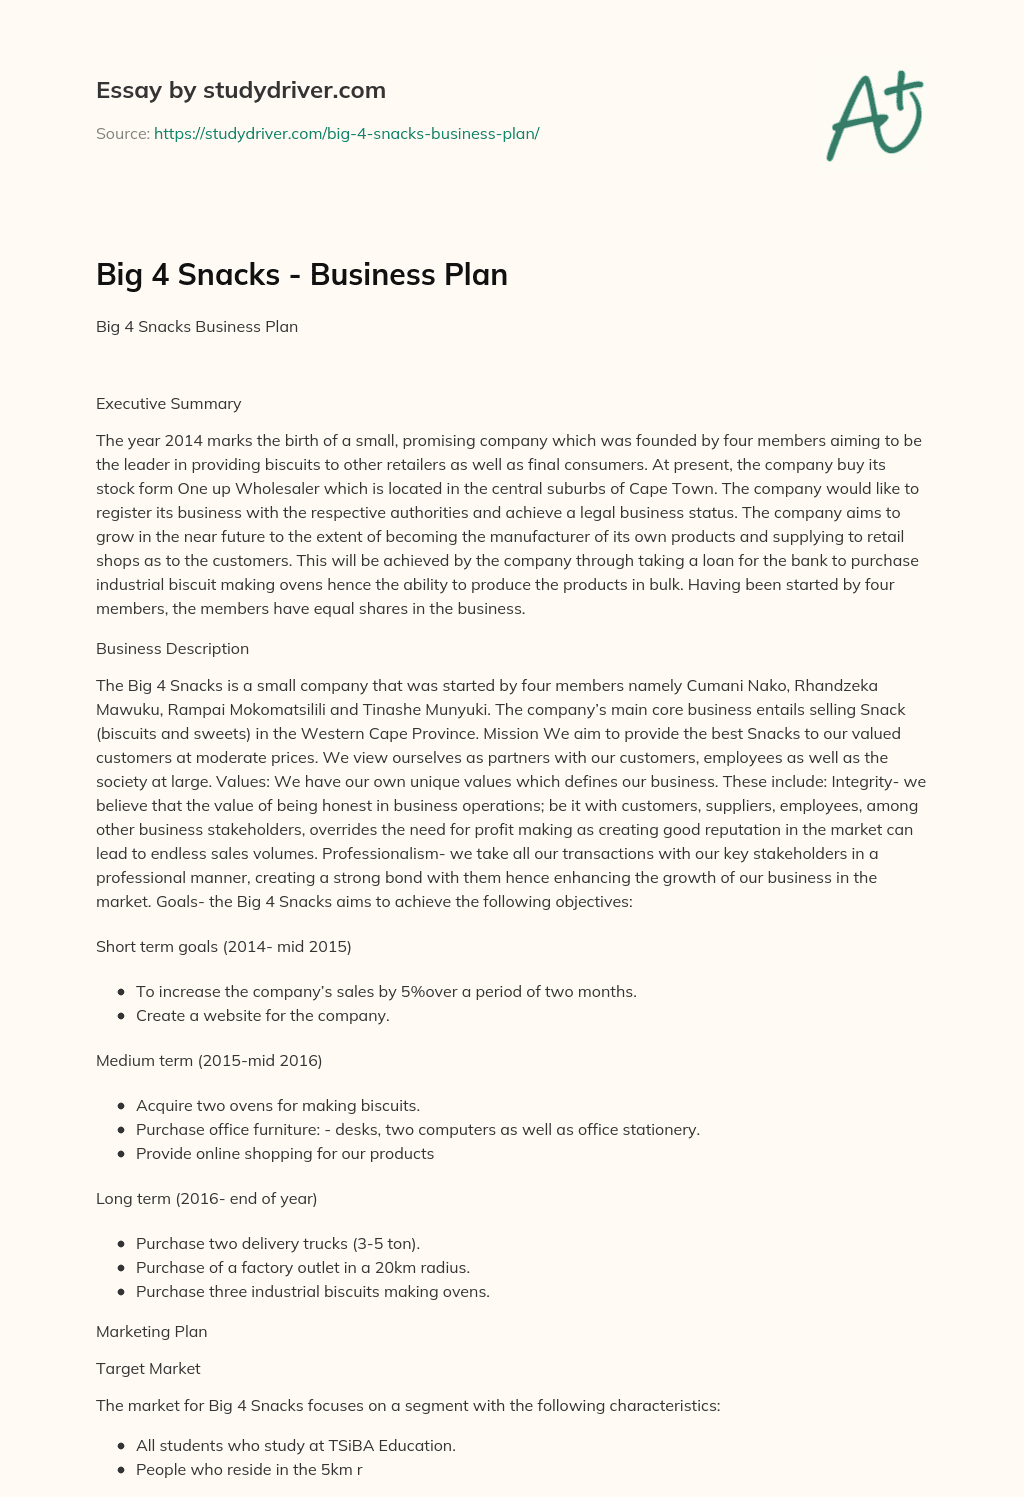 Big 4 Snacks – Business Plan essay